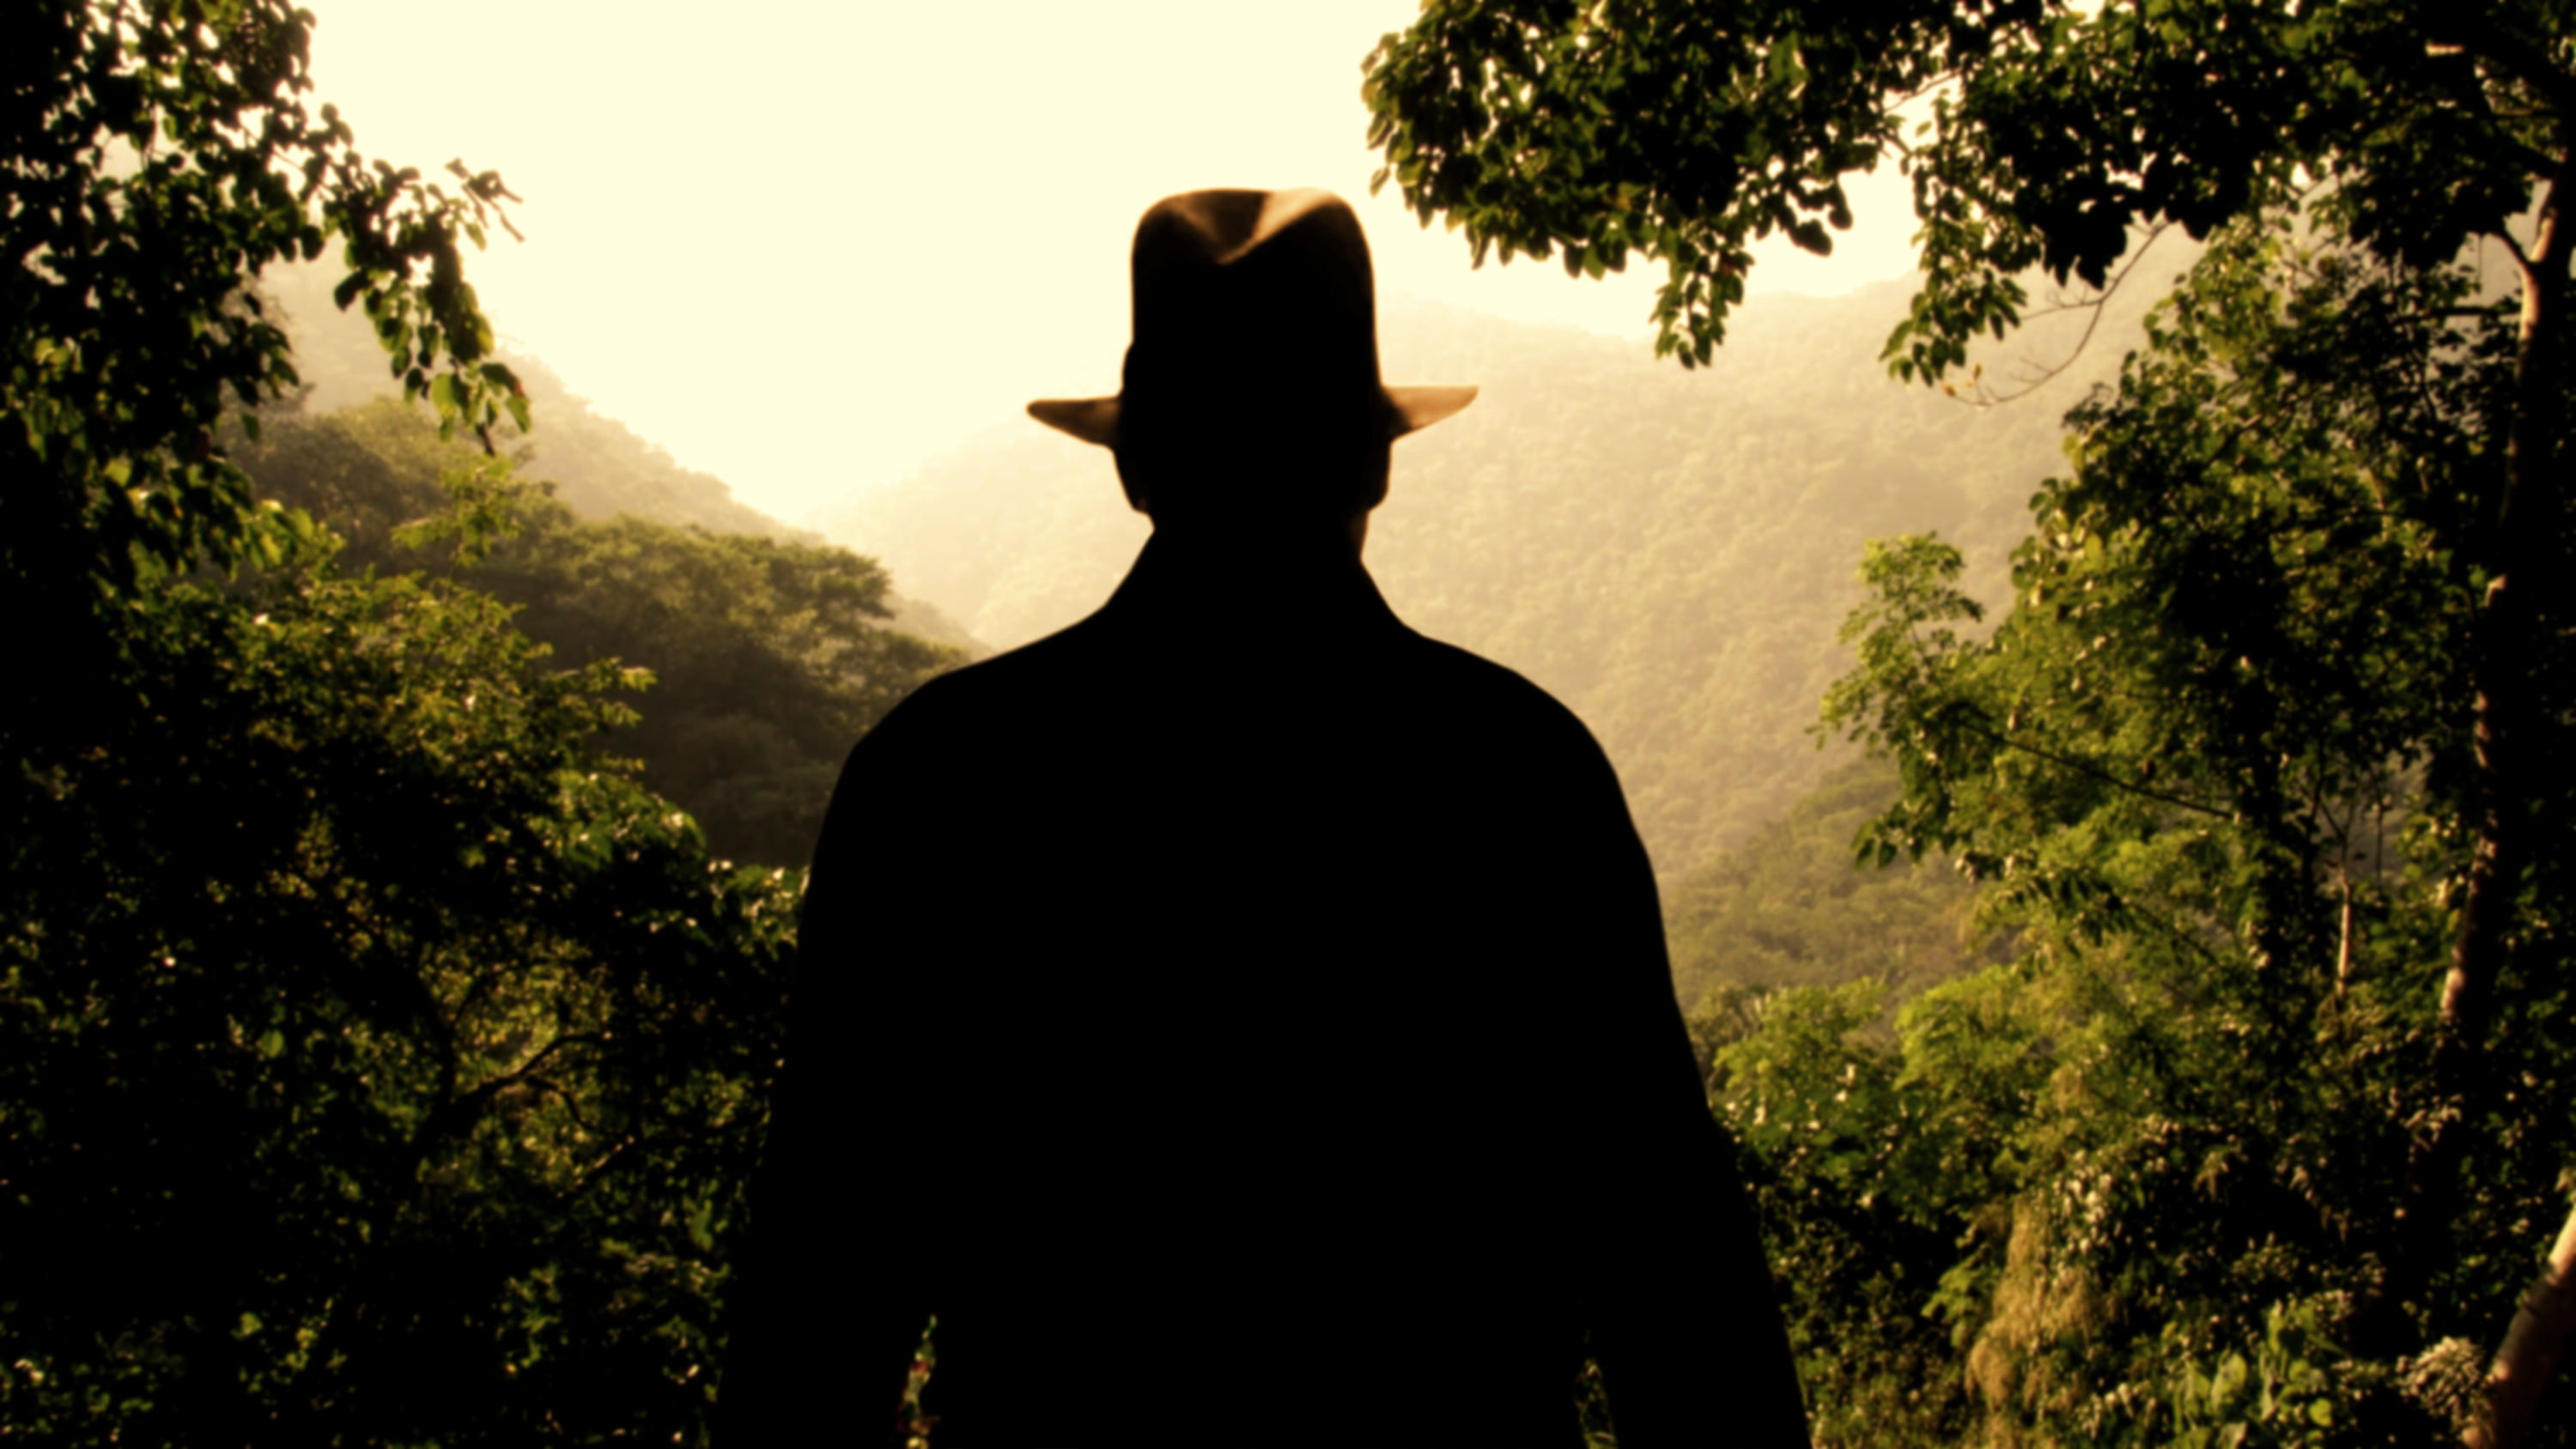 Indiana Jones 5 Adds Phoebe Waller-Bridge, John Williams Officially Returning To Score